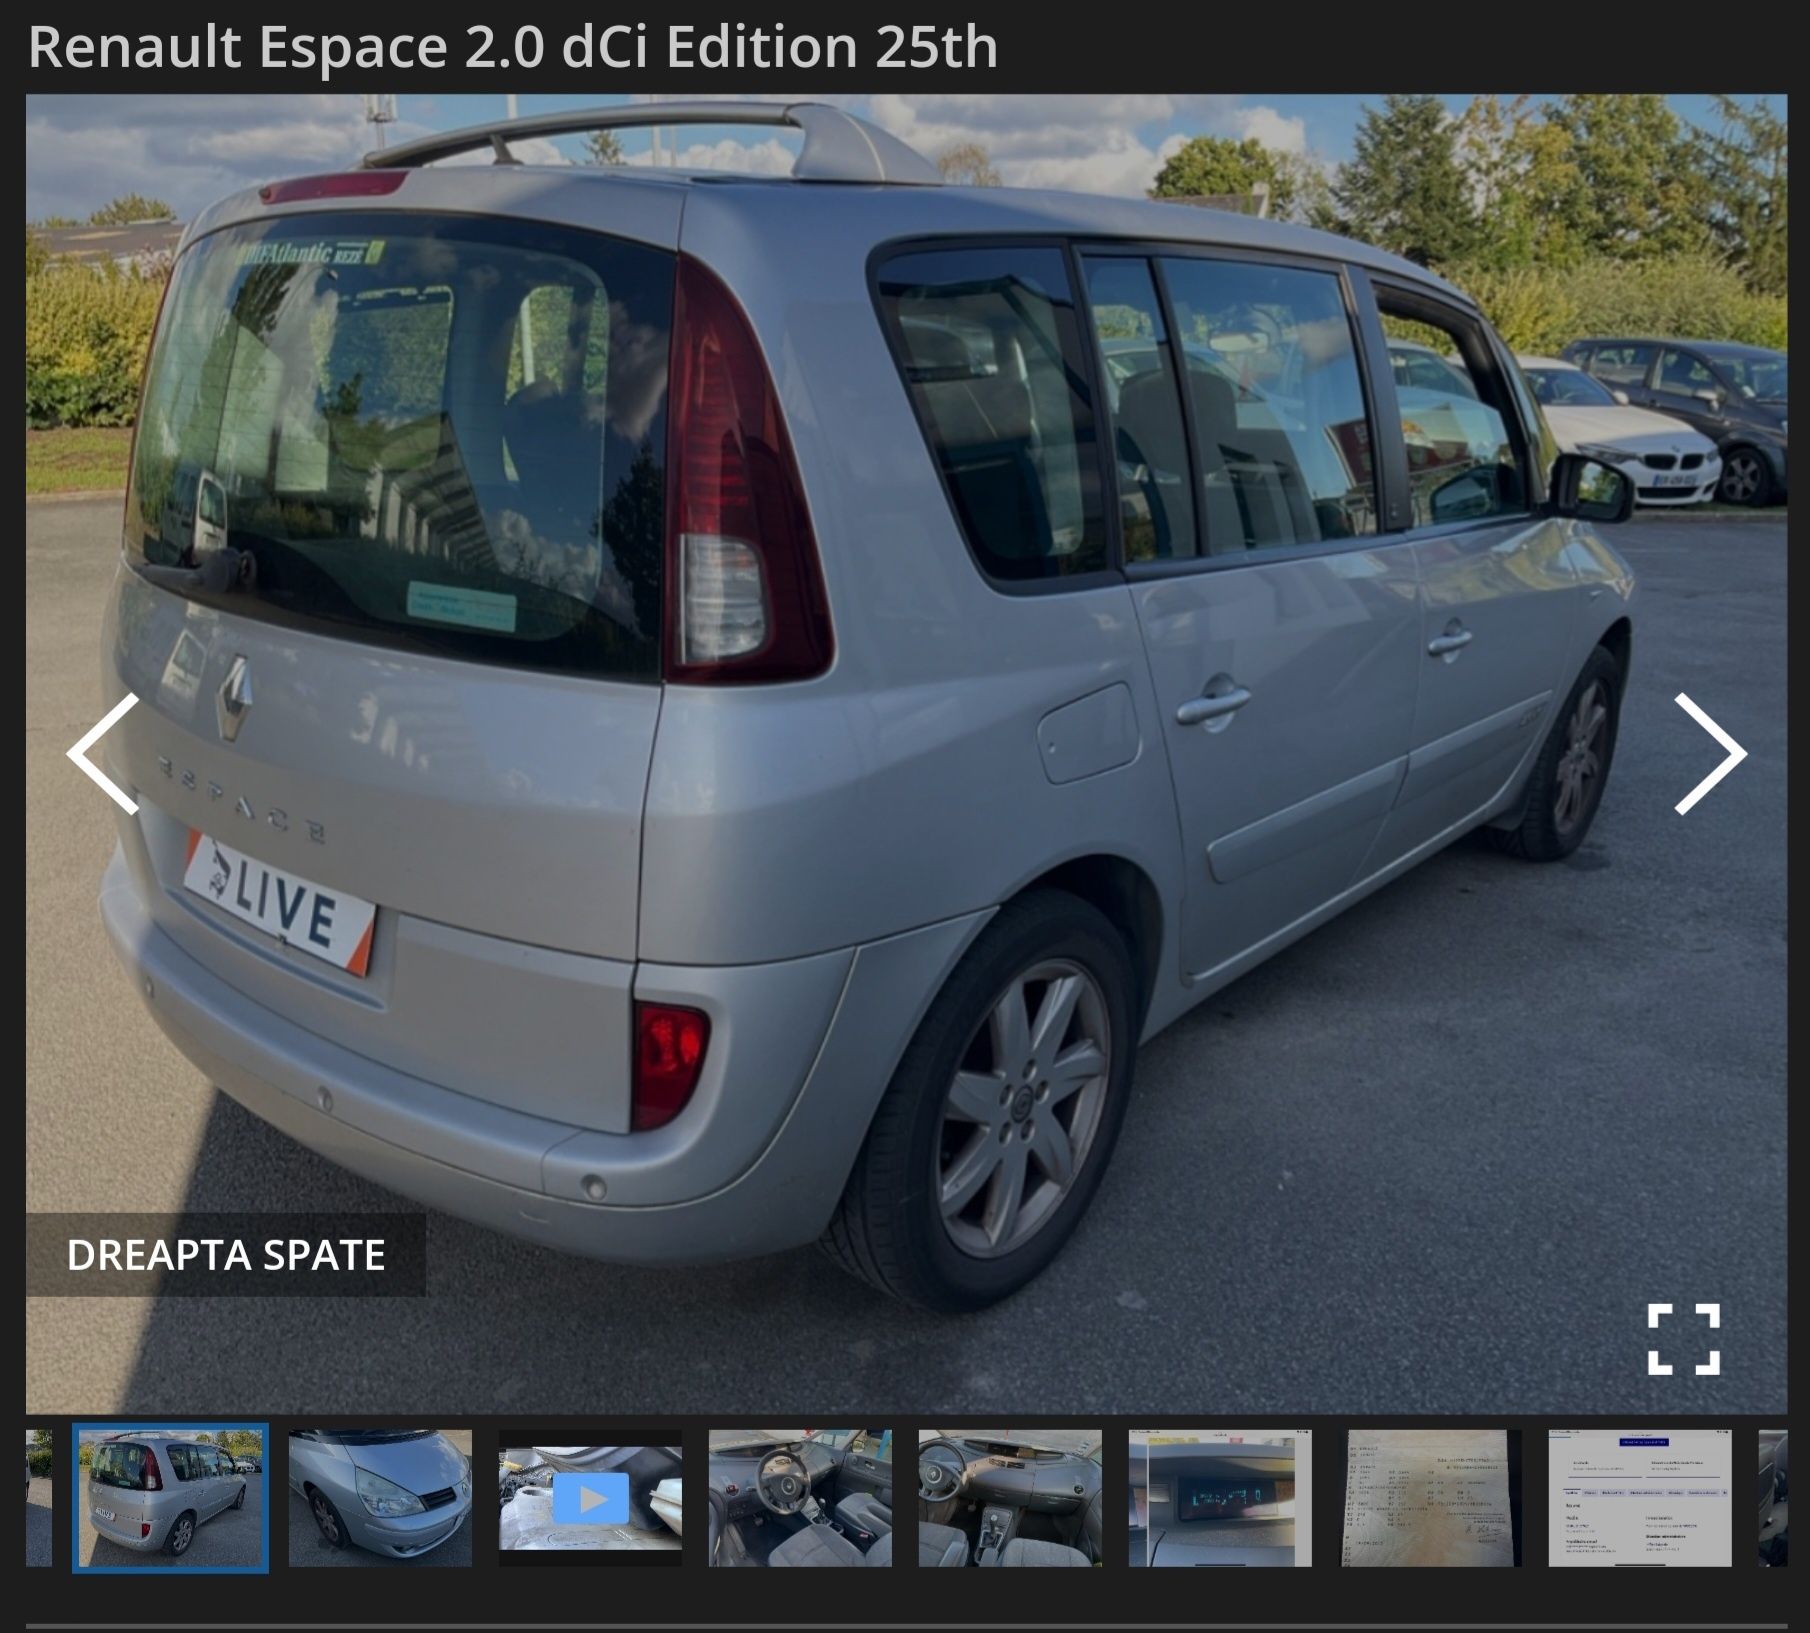 4500e fix Renault Espace 07.2010, Automat , DVD,Navi, Edition25, inmat